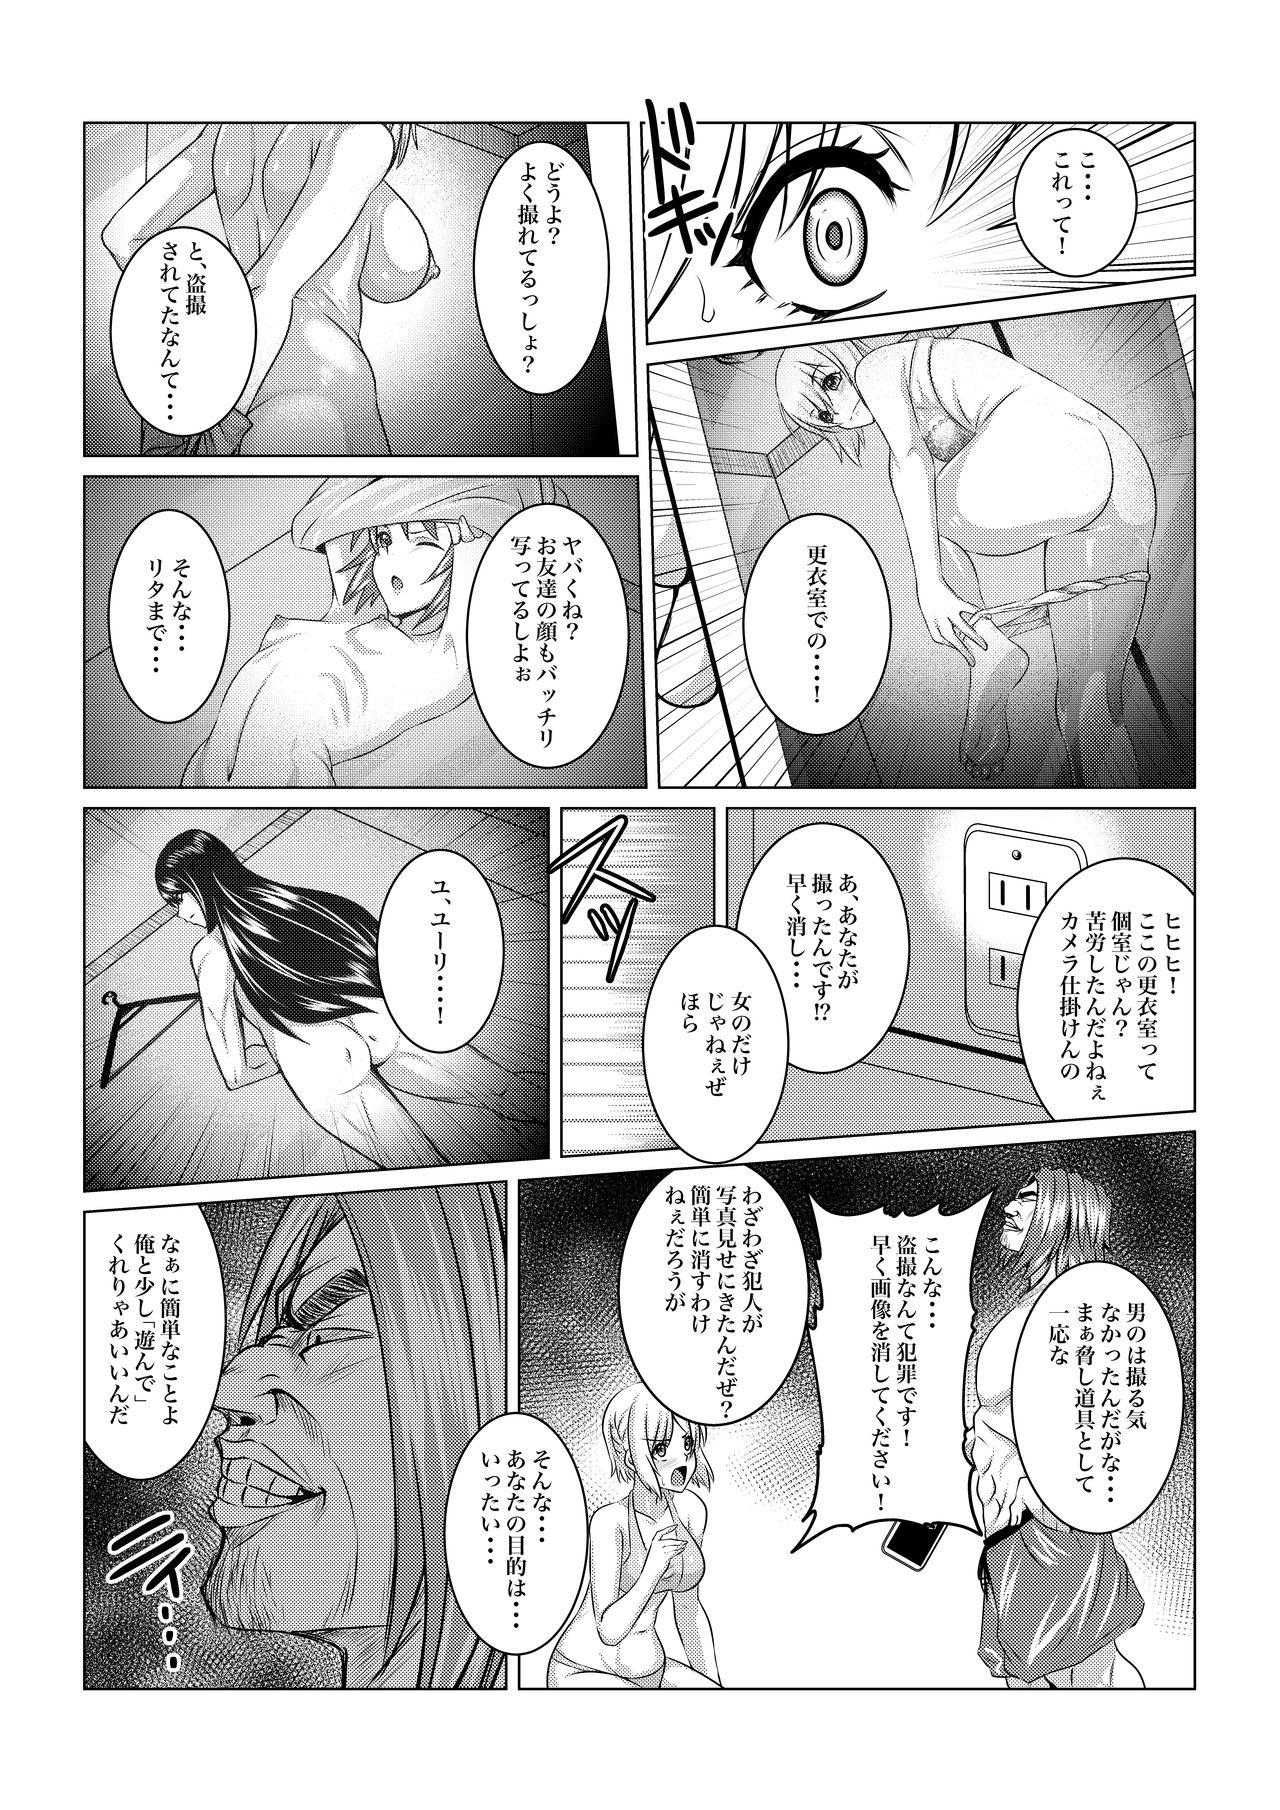  Gekka Midarezaki - Tales of vesperia Couch - Page 7